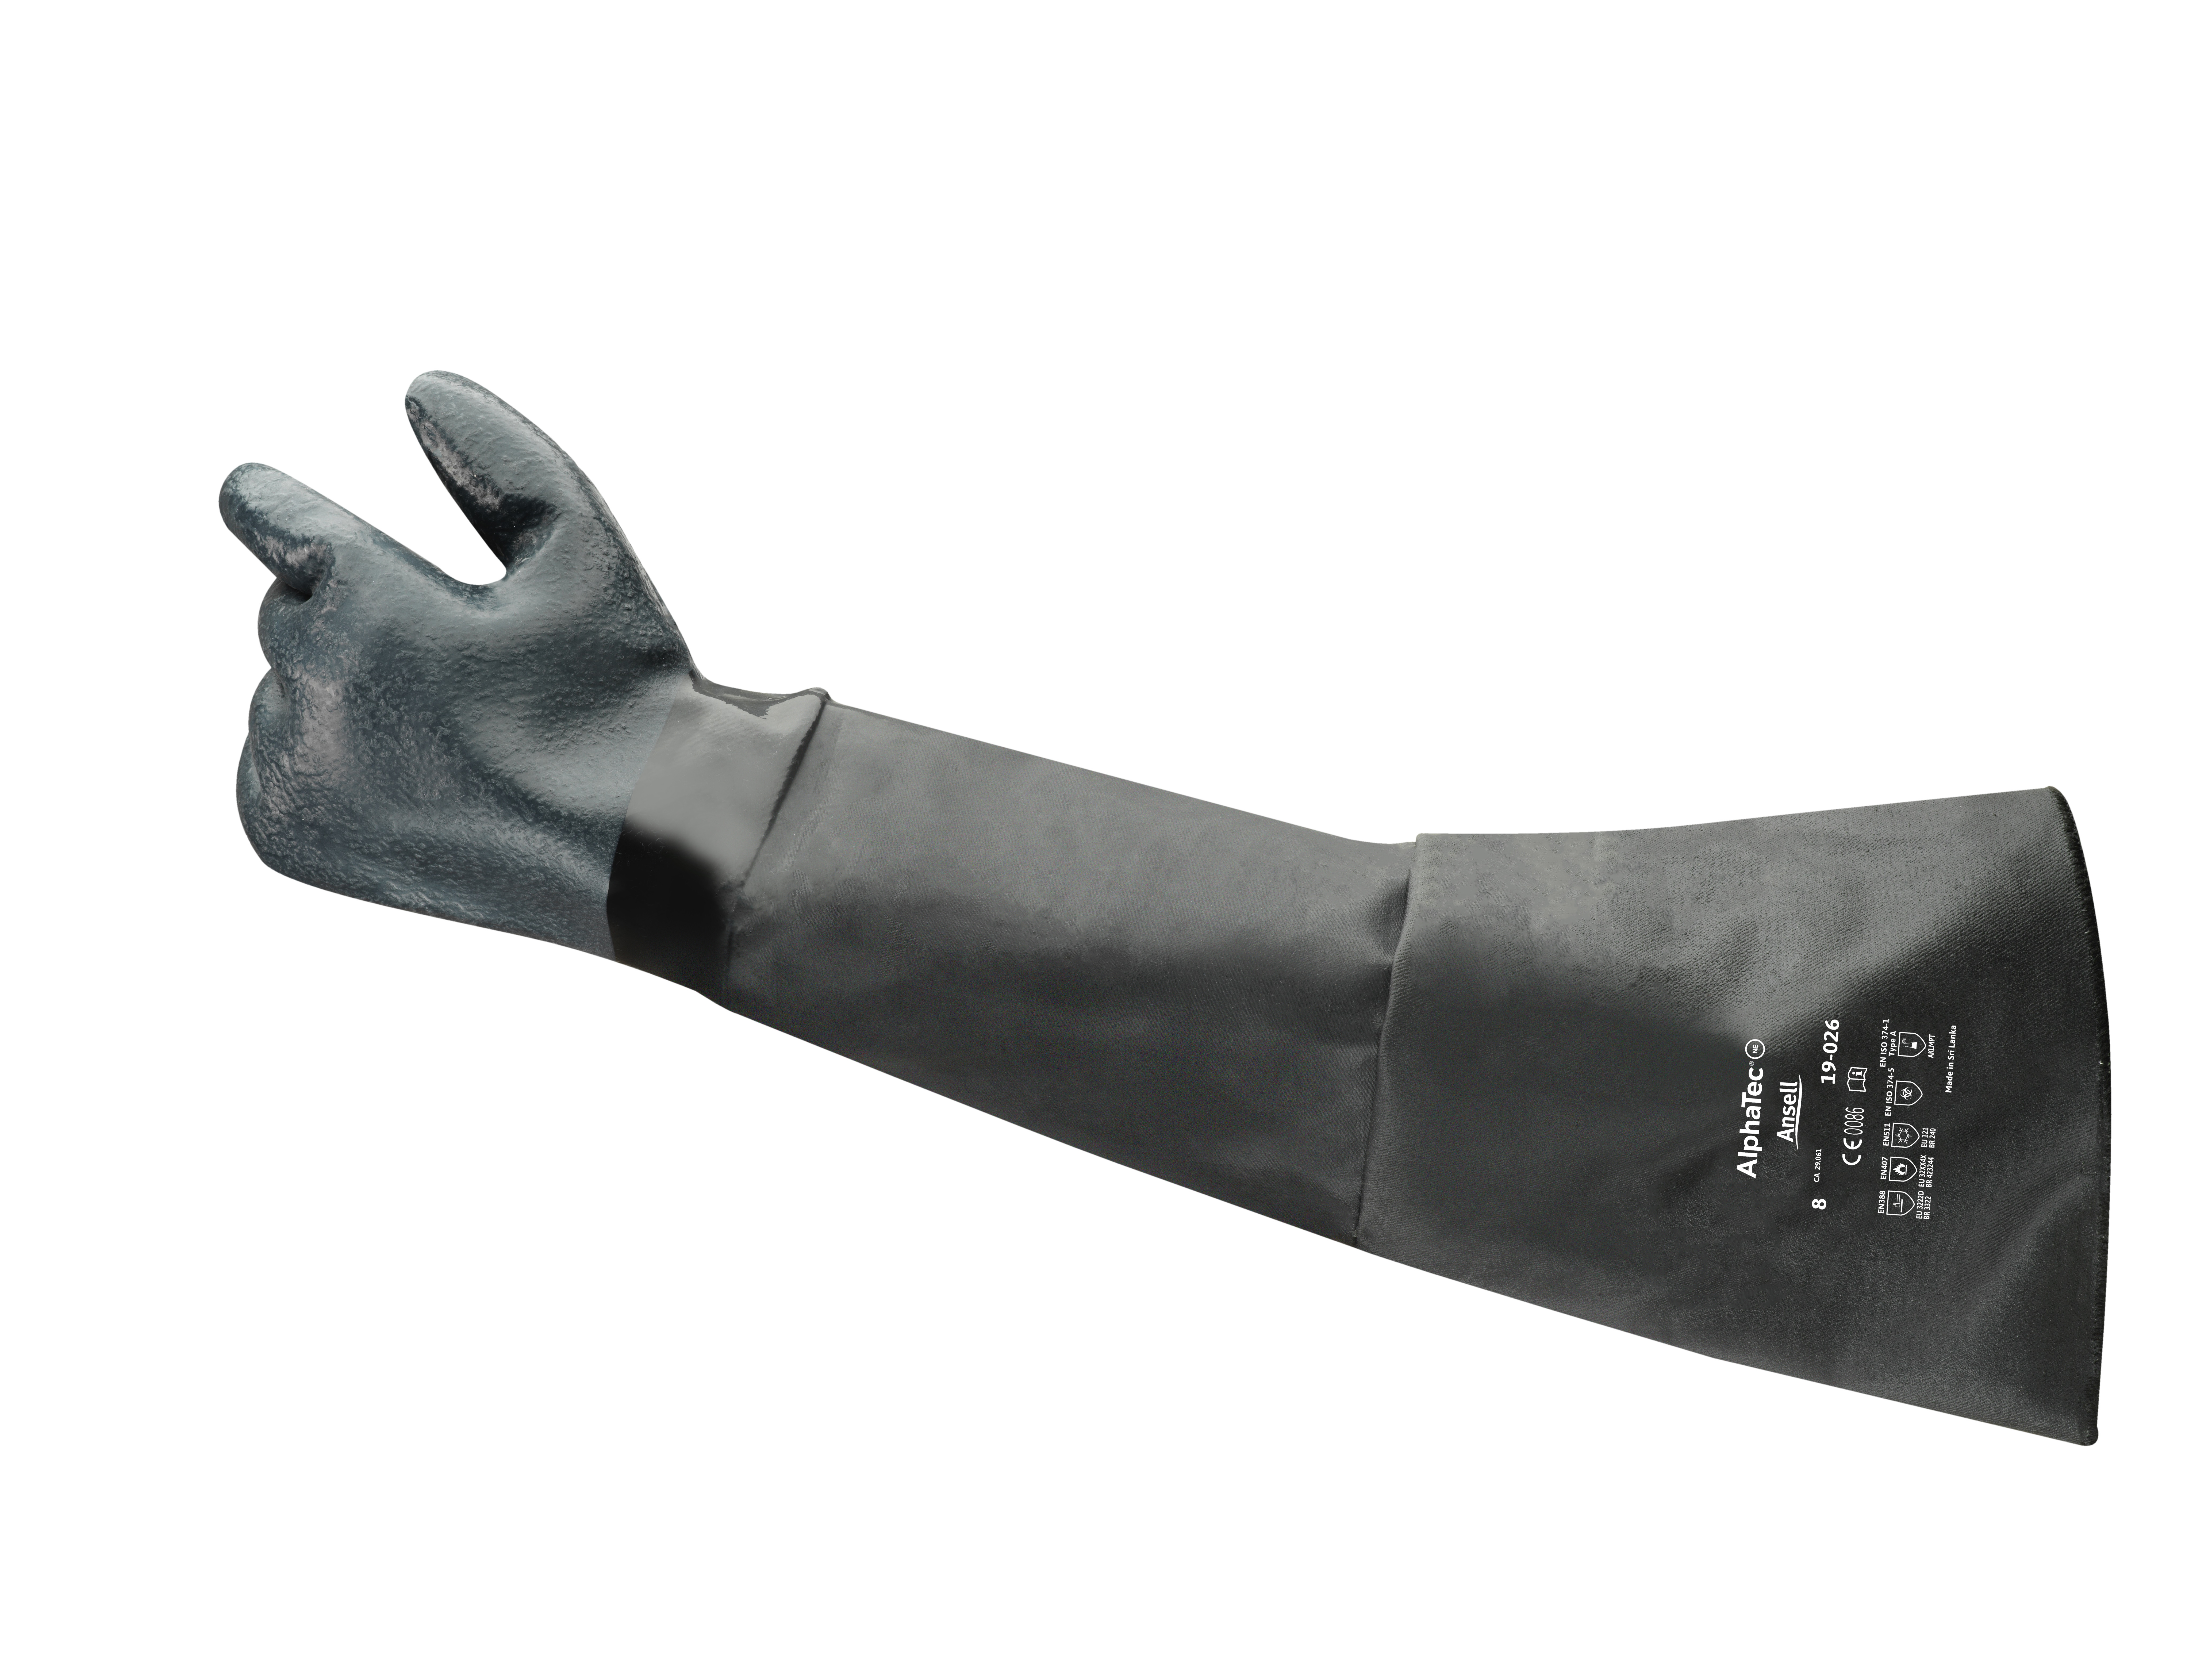 Ansell Handschuh AlphaTec 19-026 (Scorpio®)